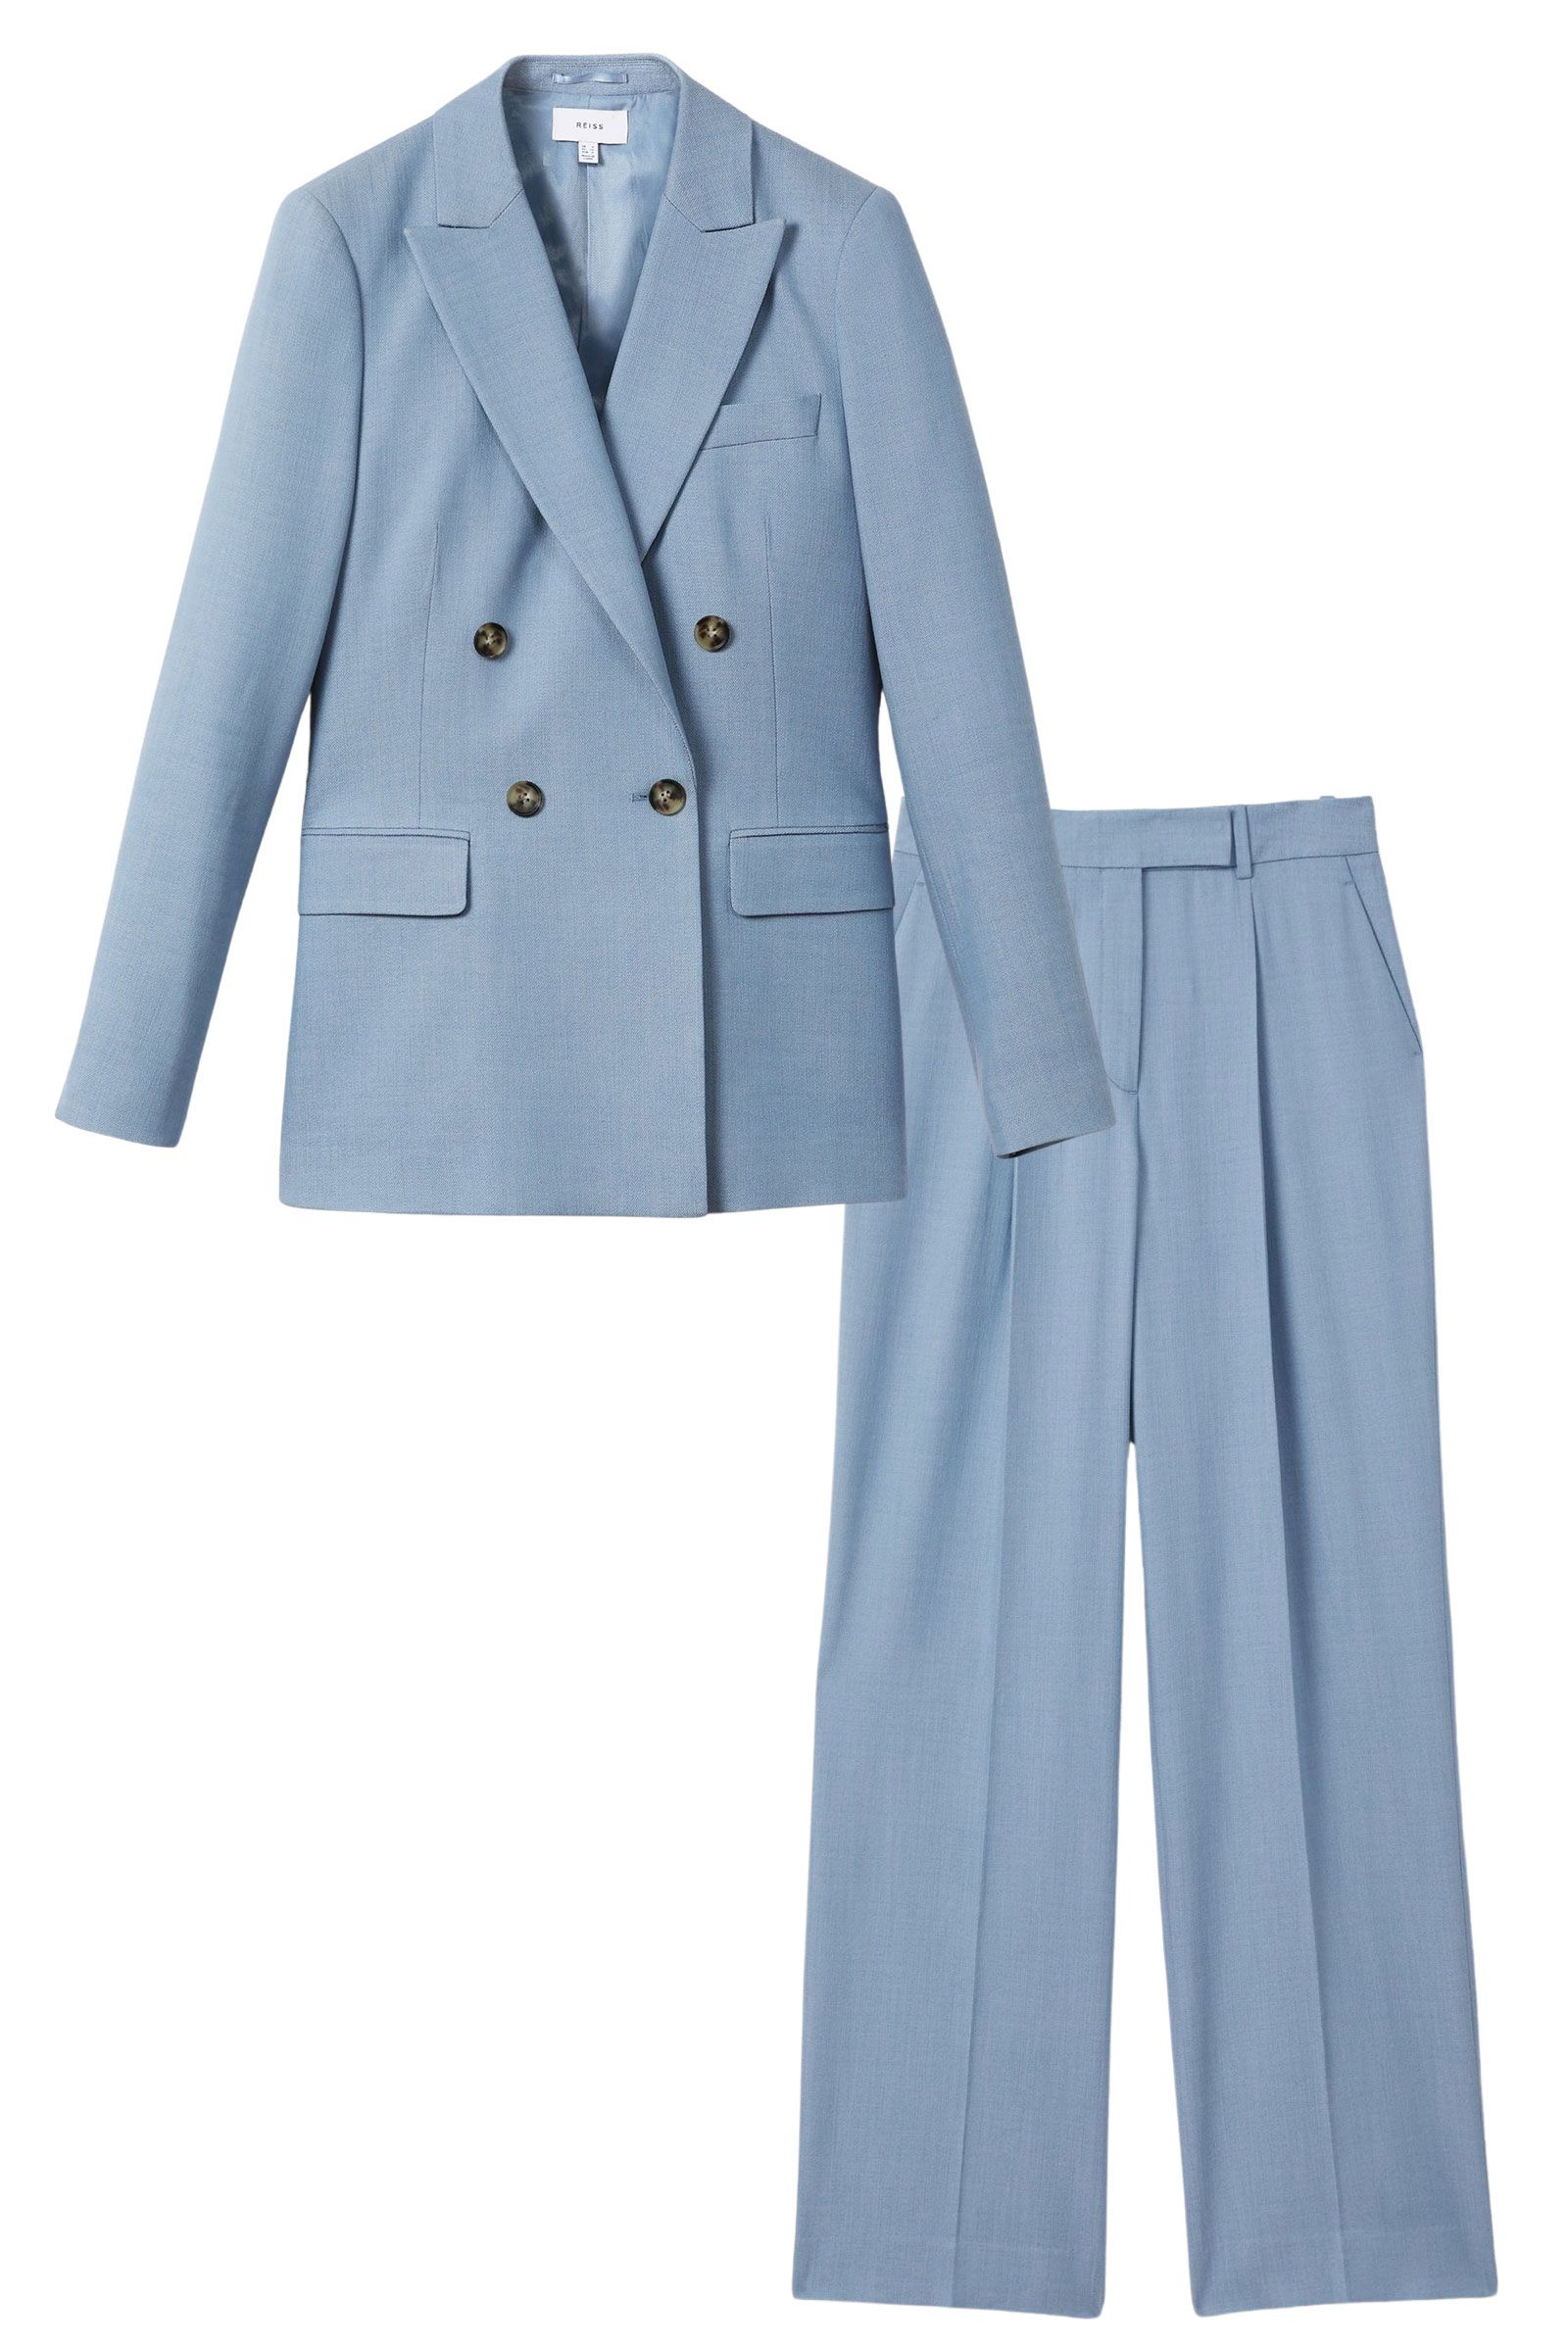 NEXT TAILORING BLUE Workwear Ladies Trouser Suit Size 12 Petite/Long New  £50.50 - PicClick UK